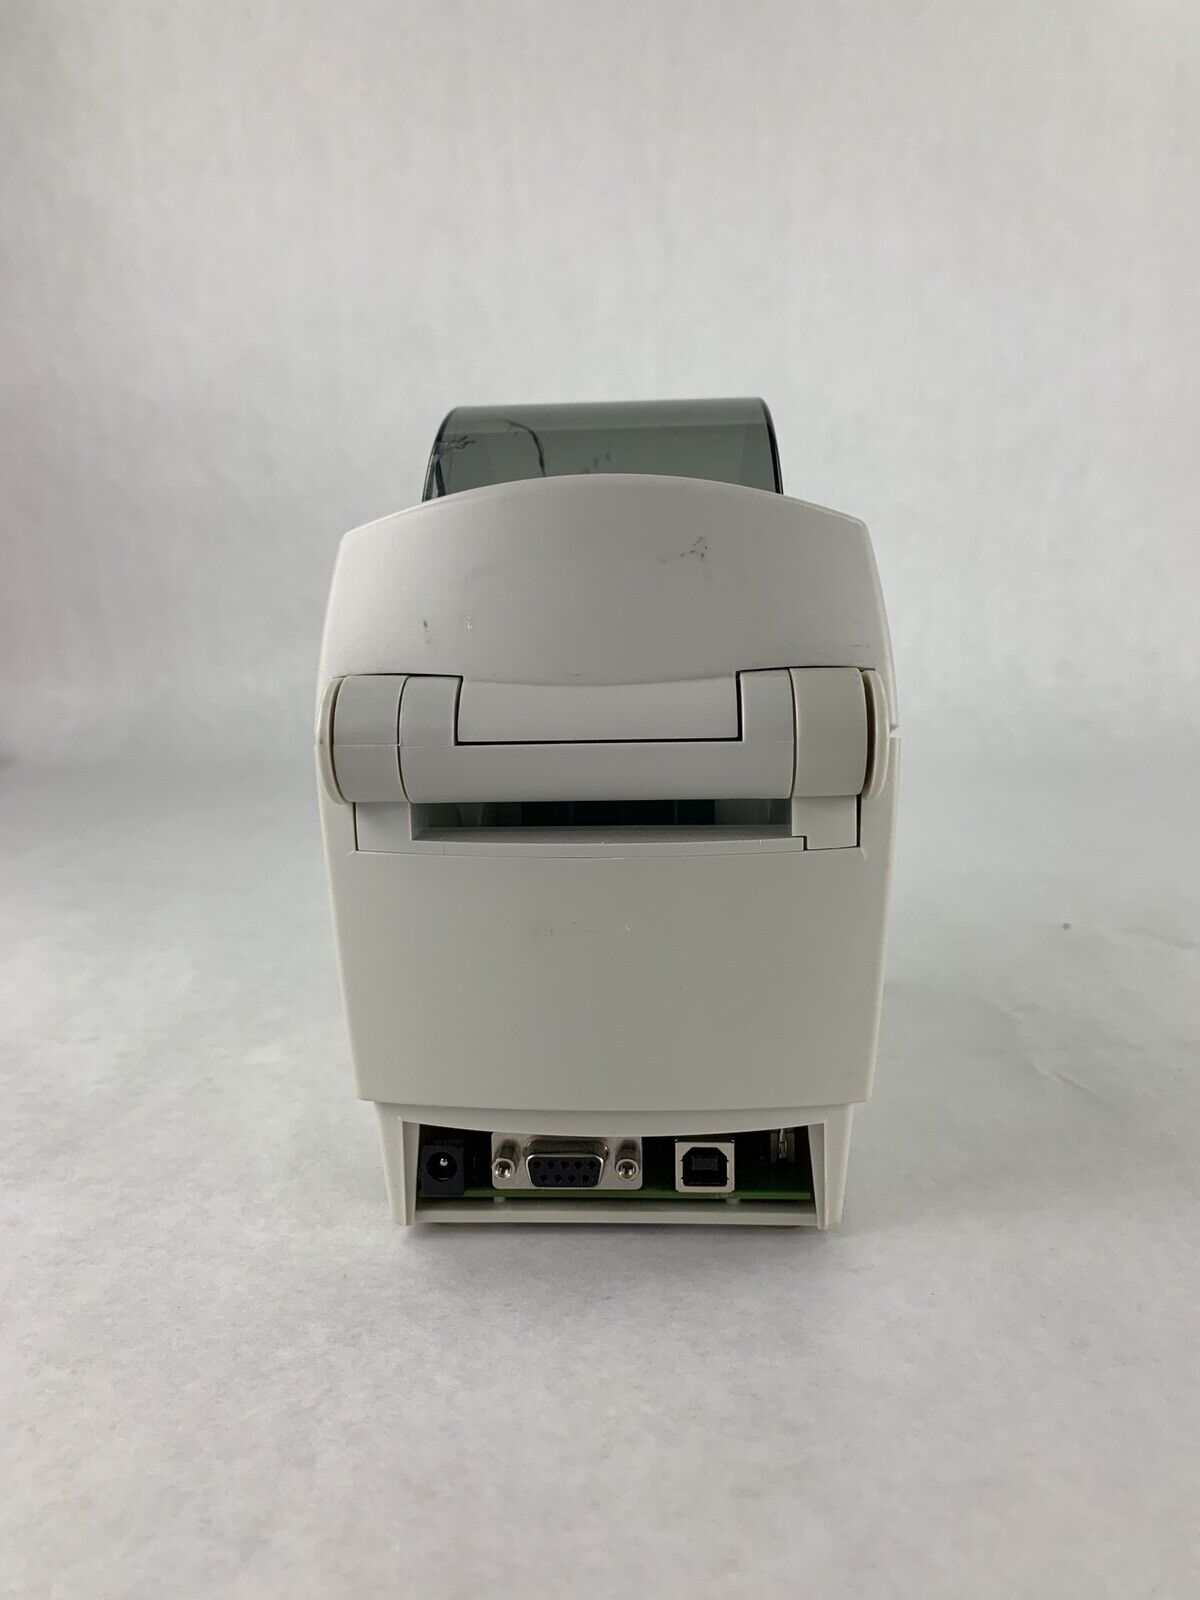 Zebra LP2824 Plus Thermal Printer No Power Supply For Parts and Repair